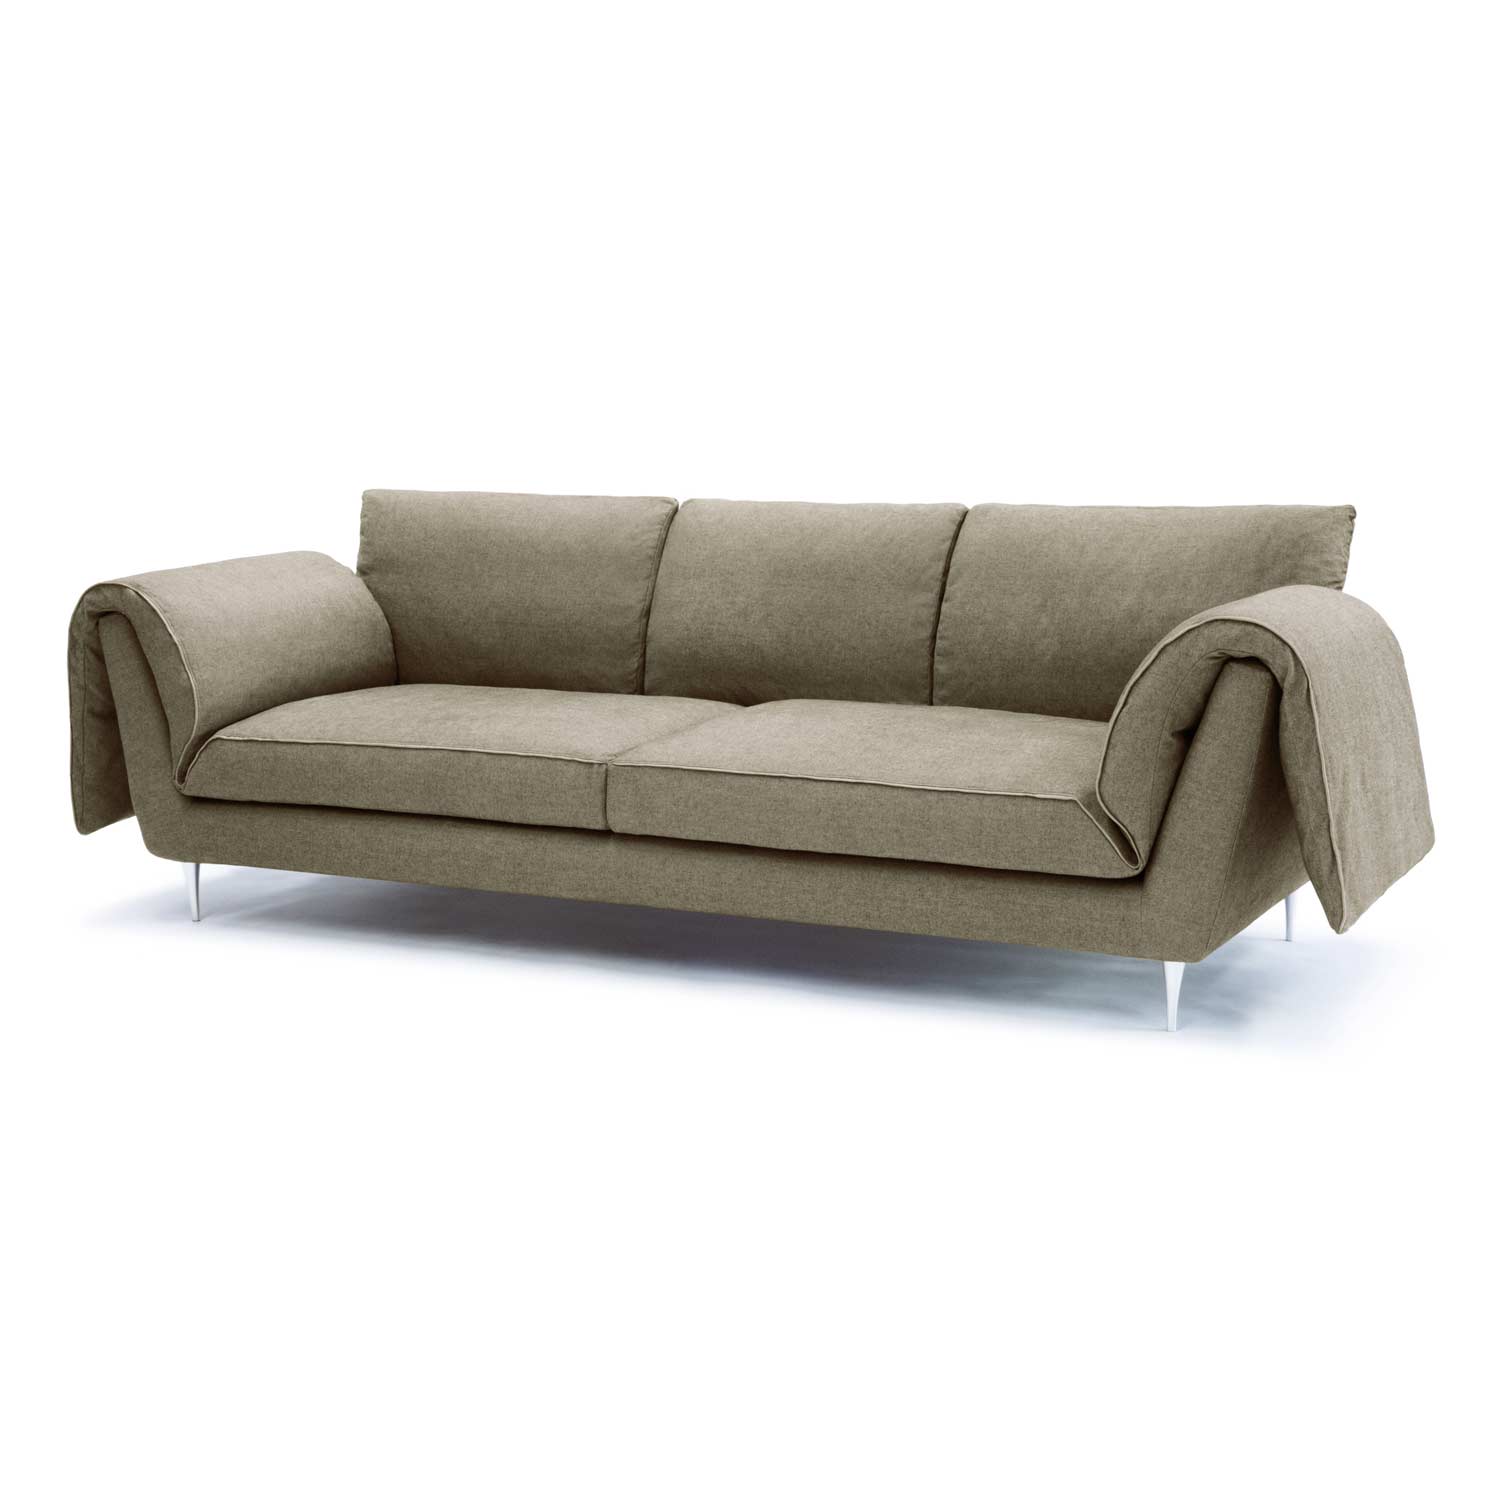 Romantic Design: Angled Lines Sofa